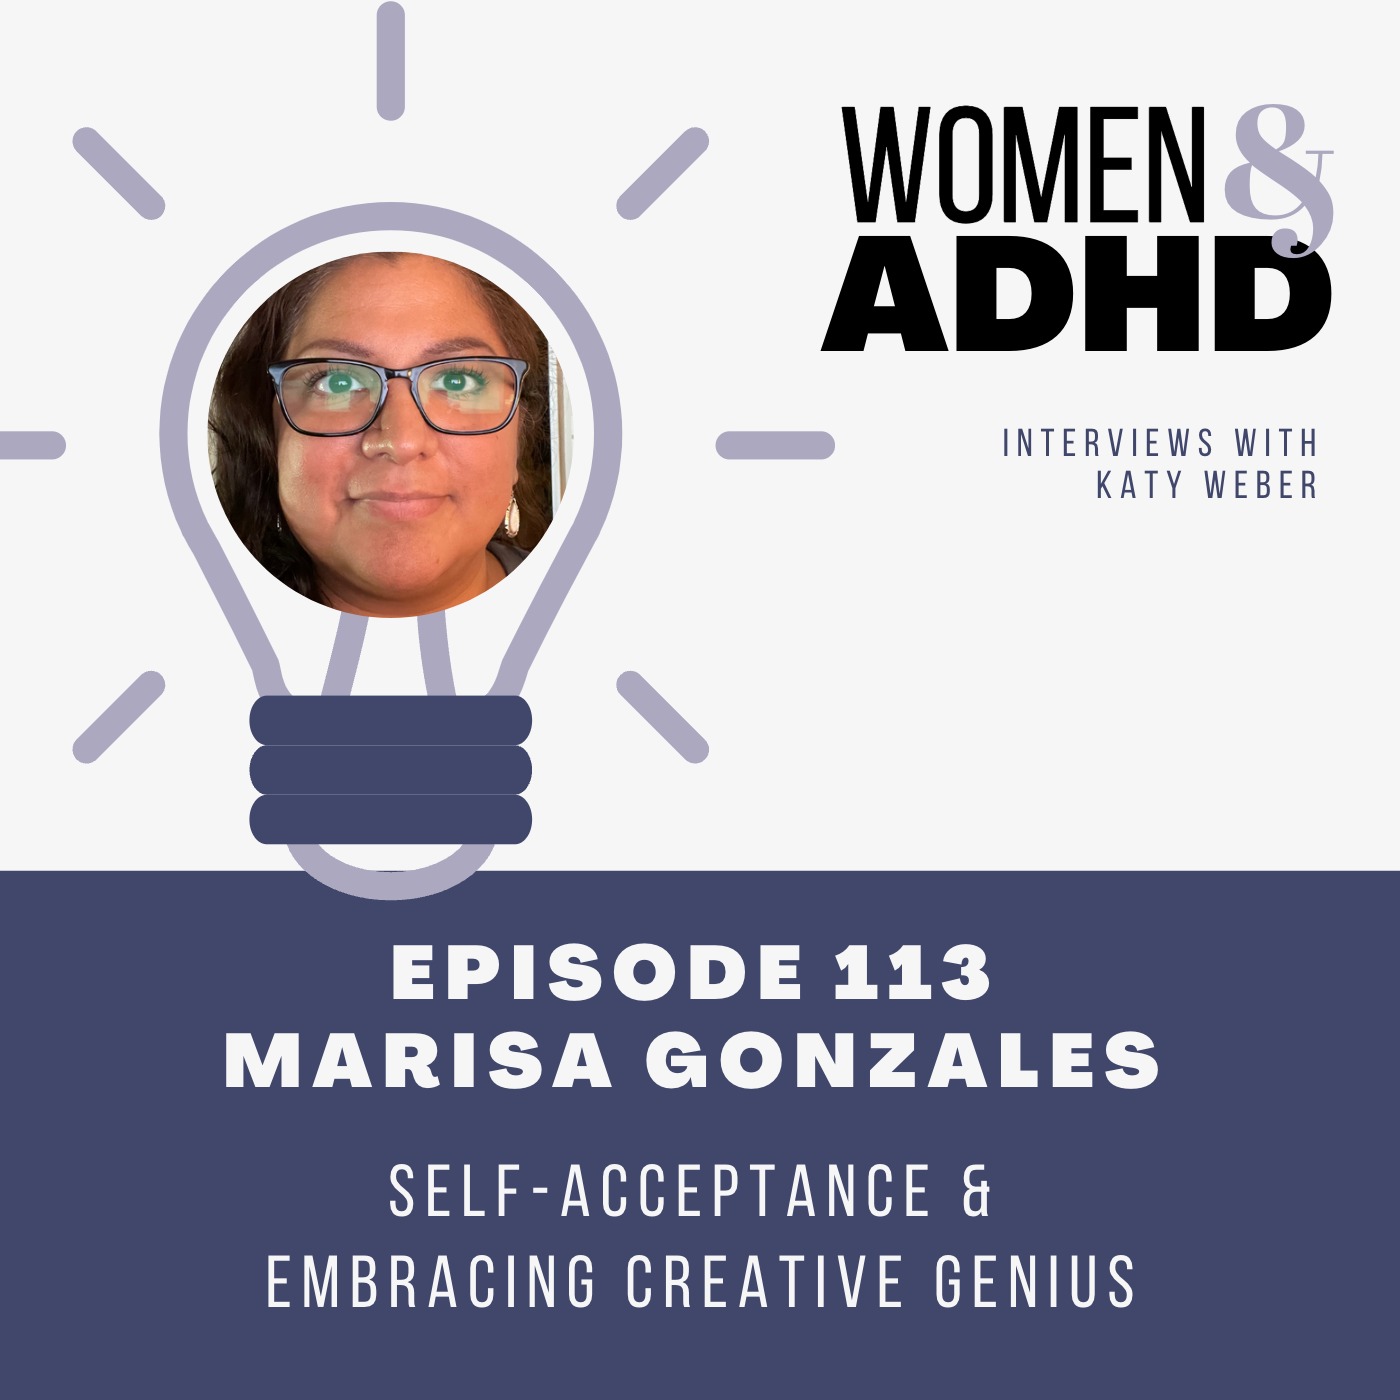 Marisa Gonzales: Self-acceptance & embracing creative genius